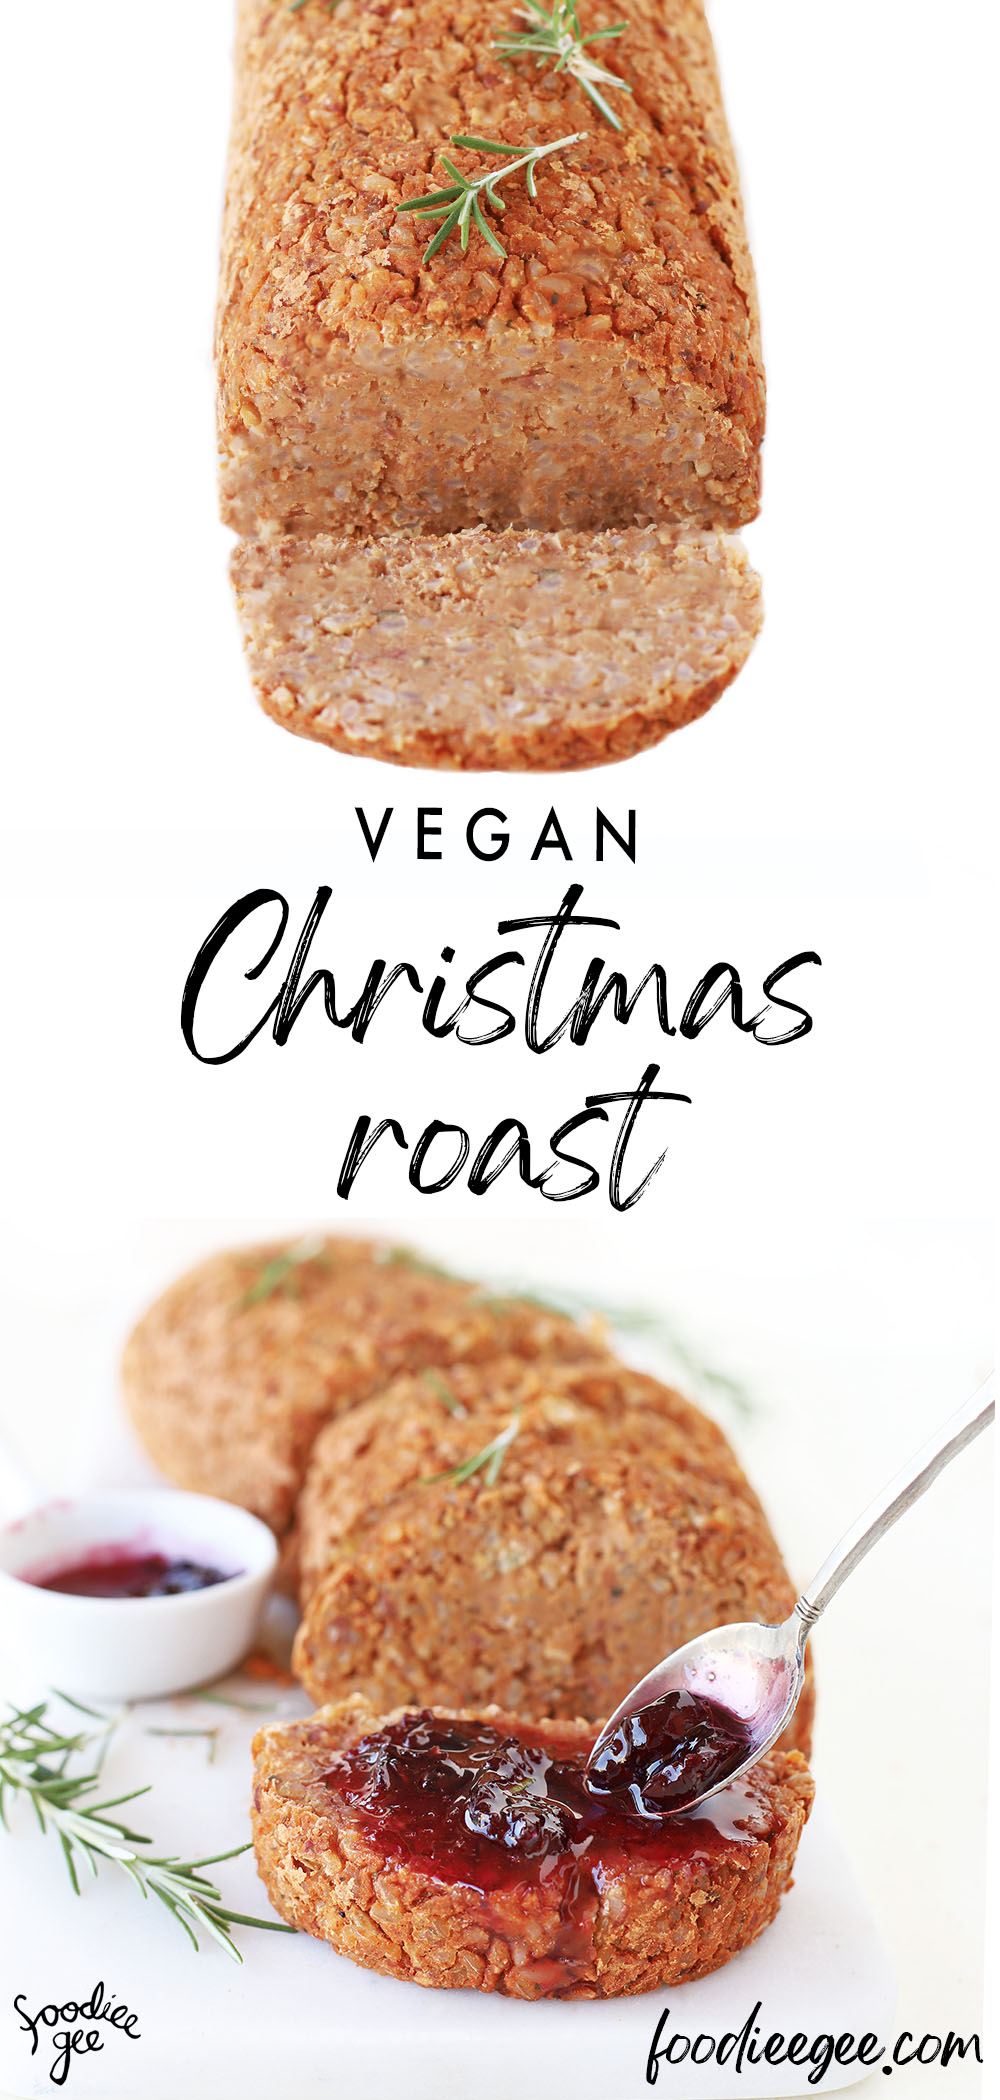 Vegan Christmas Roast 'turkey' meatloaf sliced with cranberry sauce or gravy